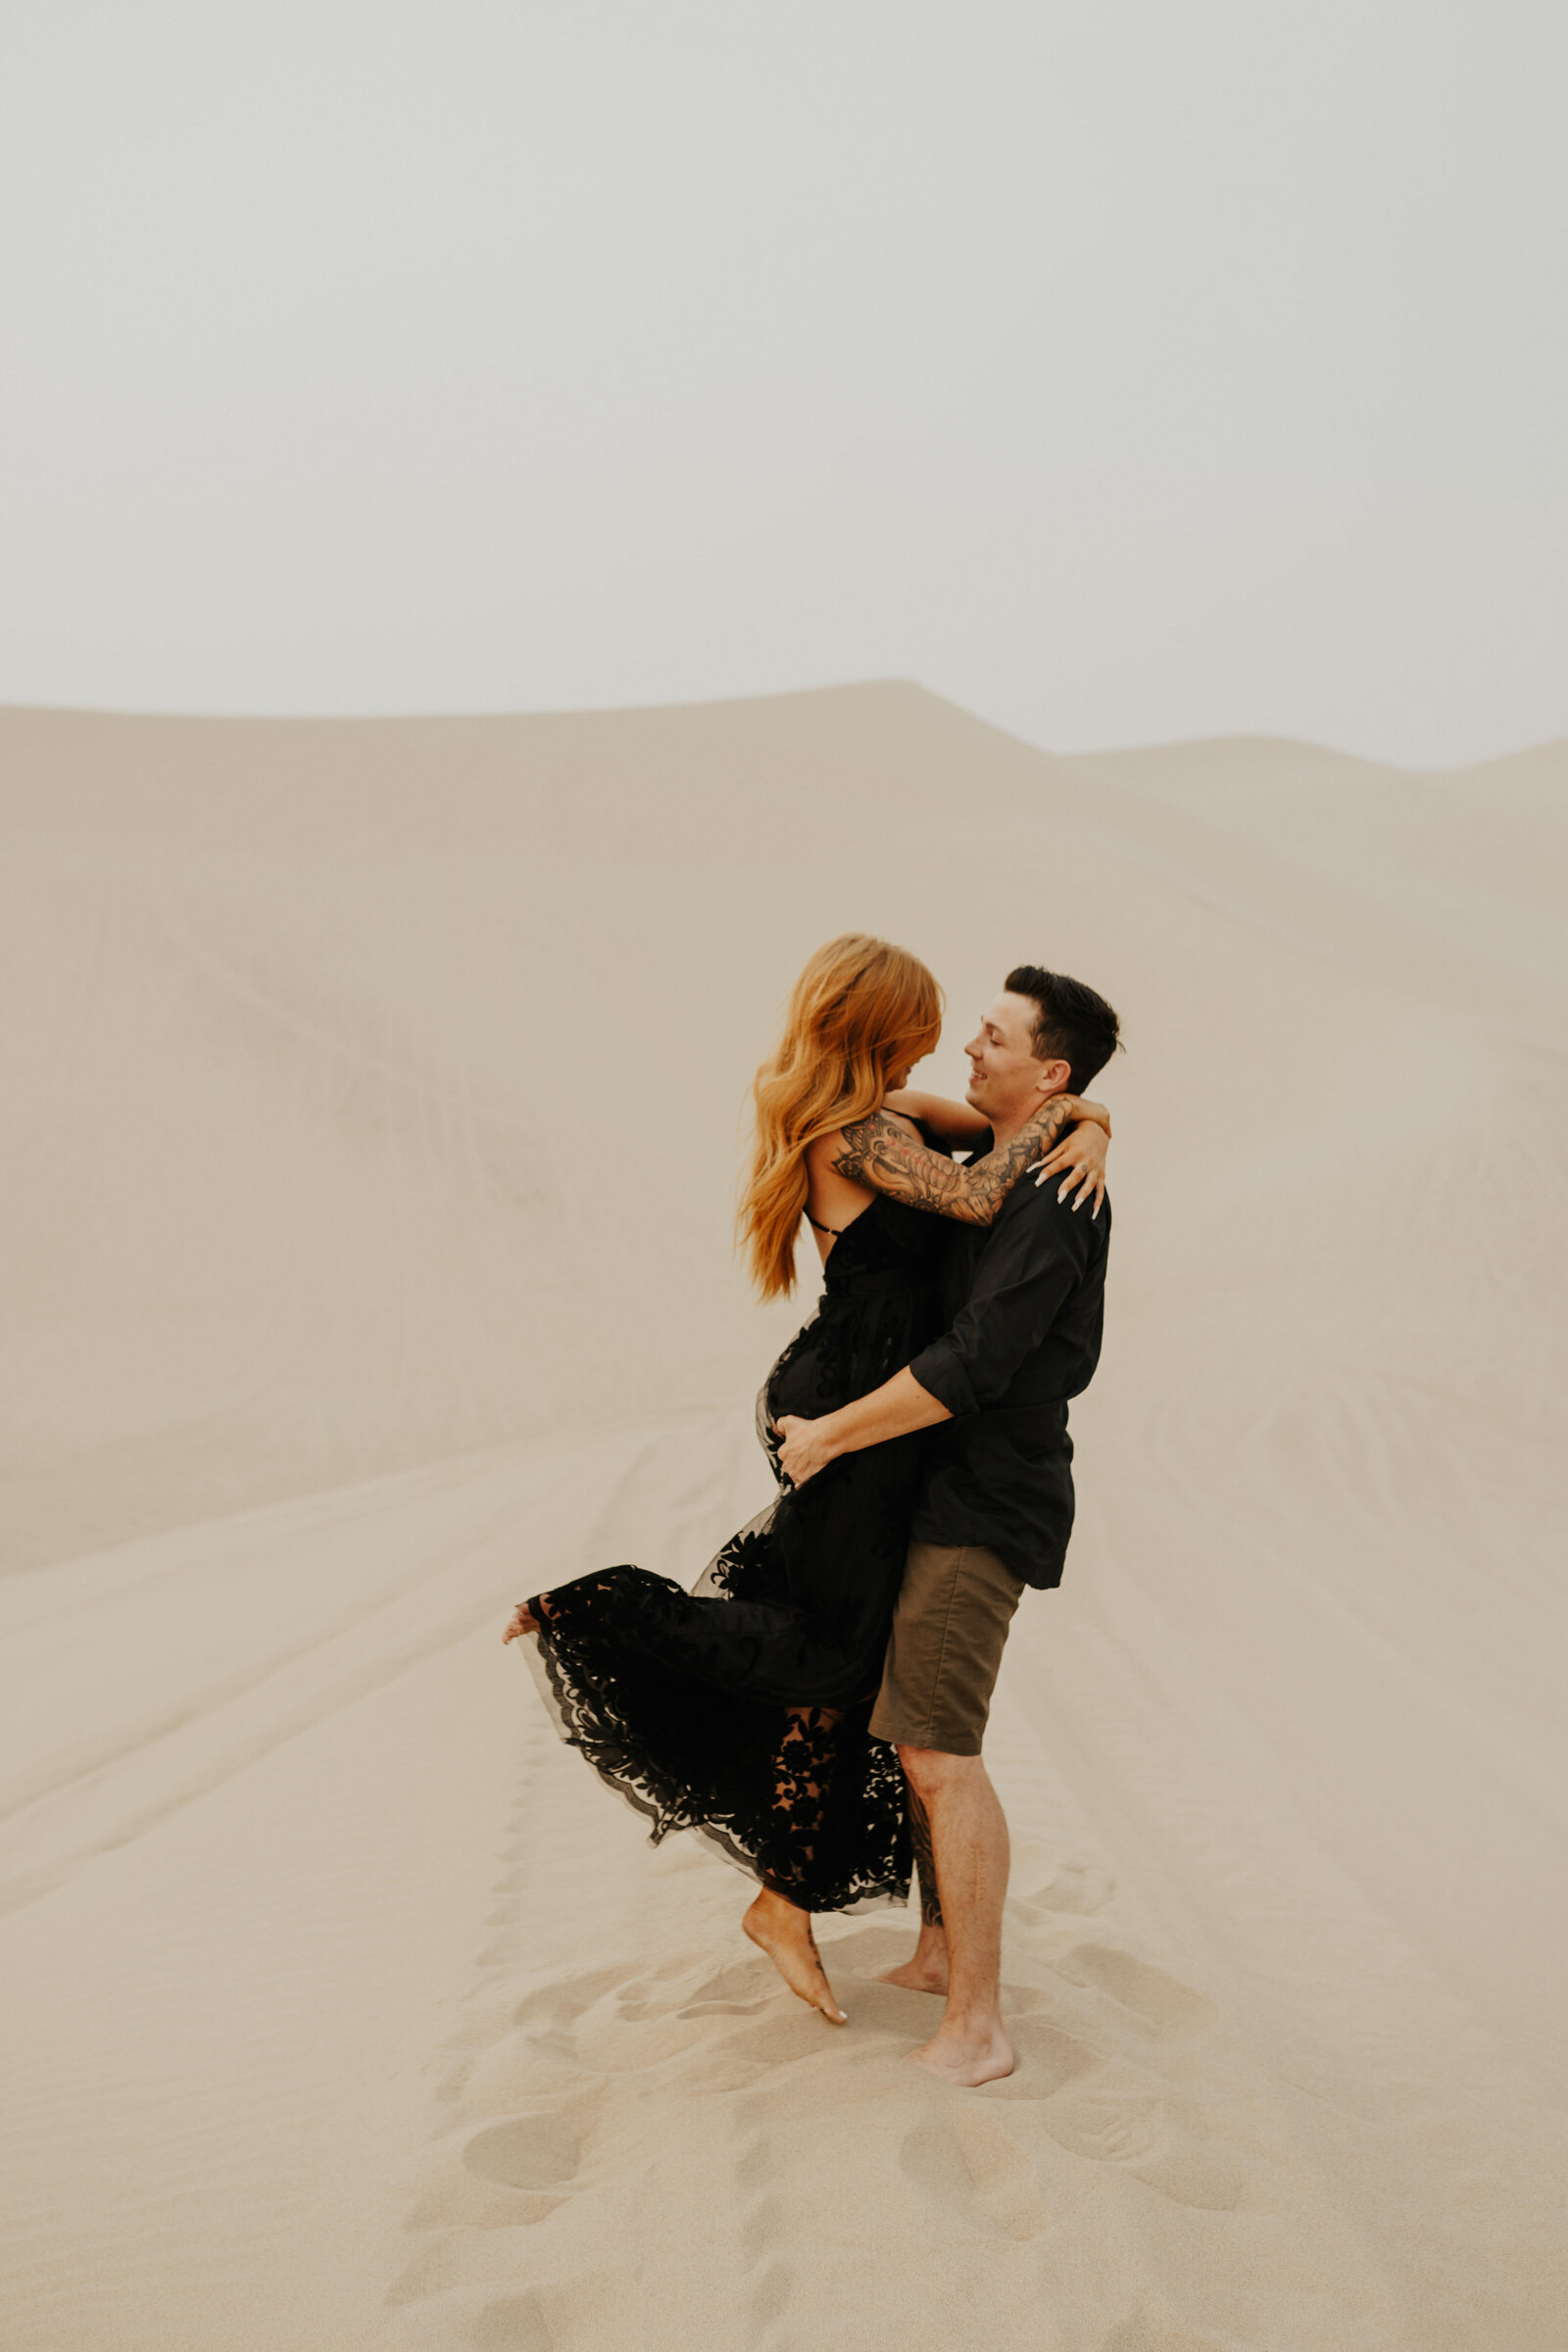 Sand Dunes Couples Photos - Raquel King Photography7